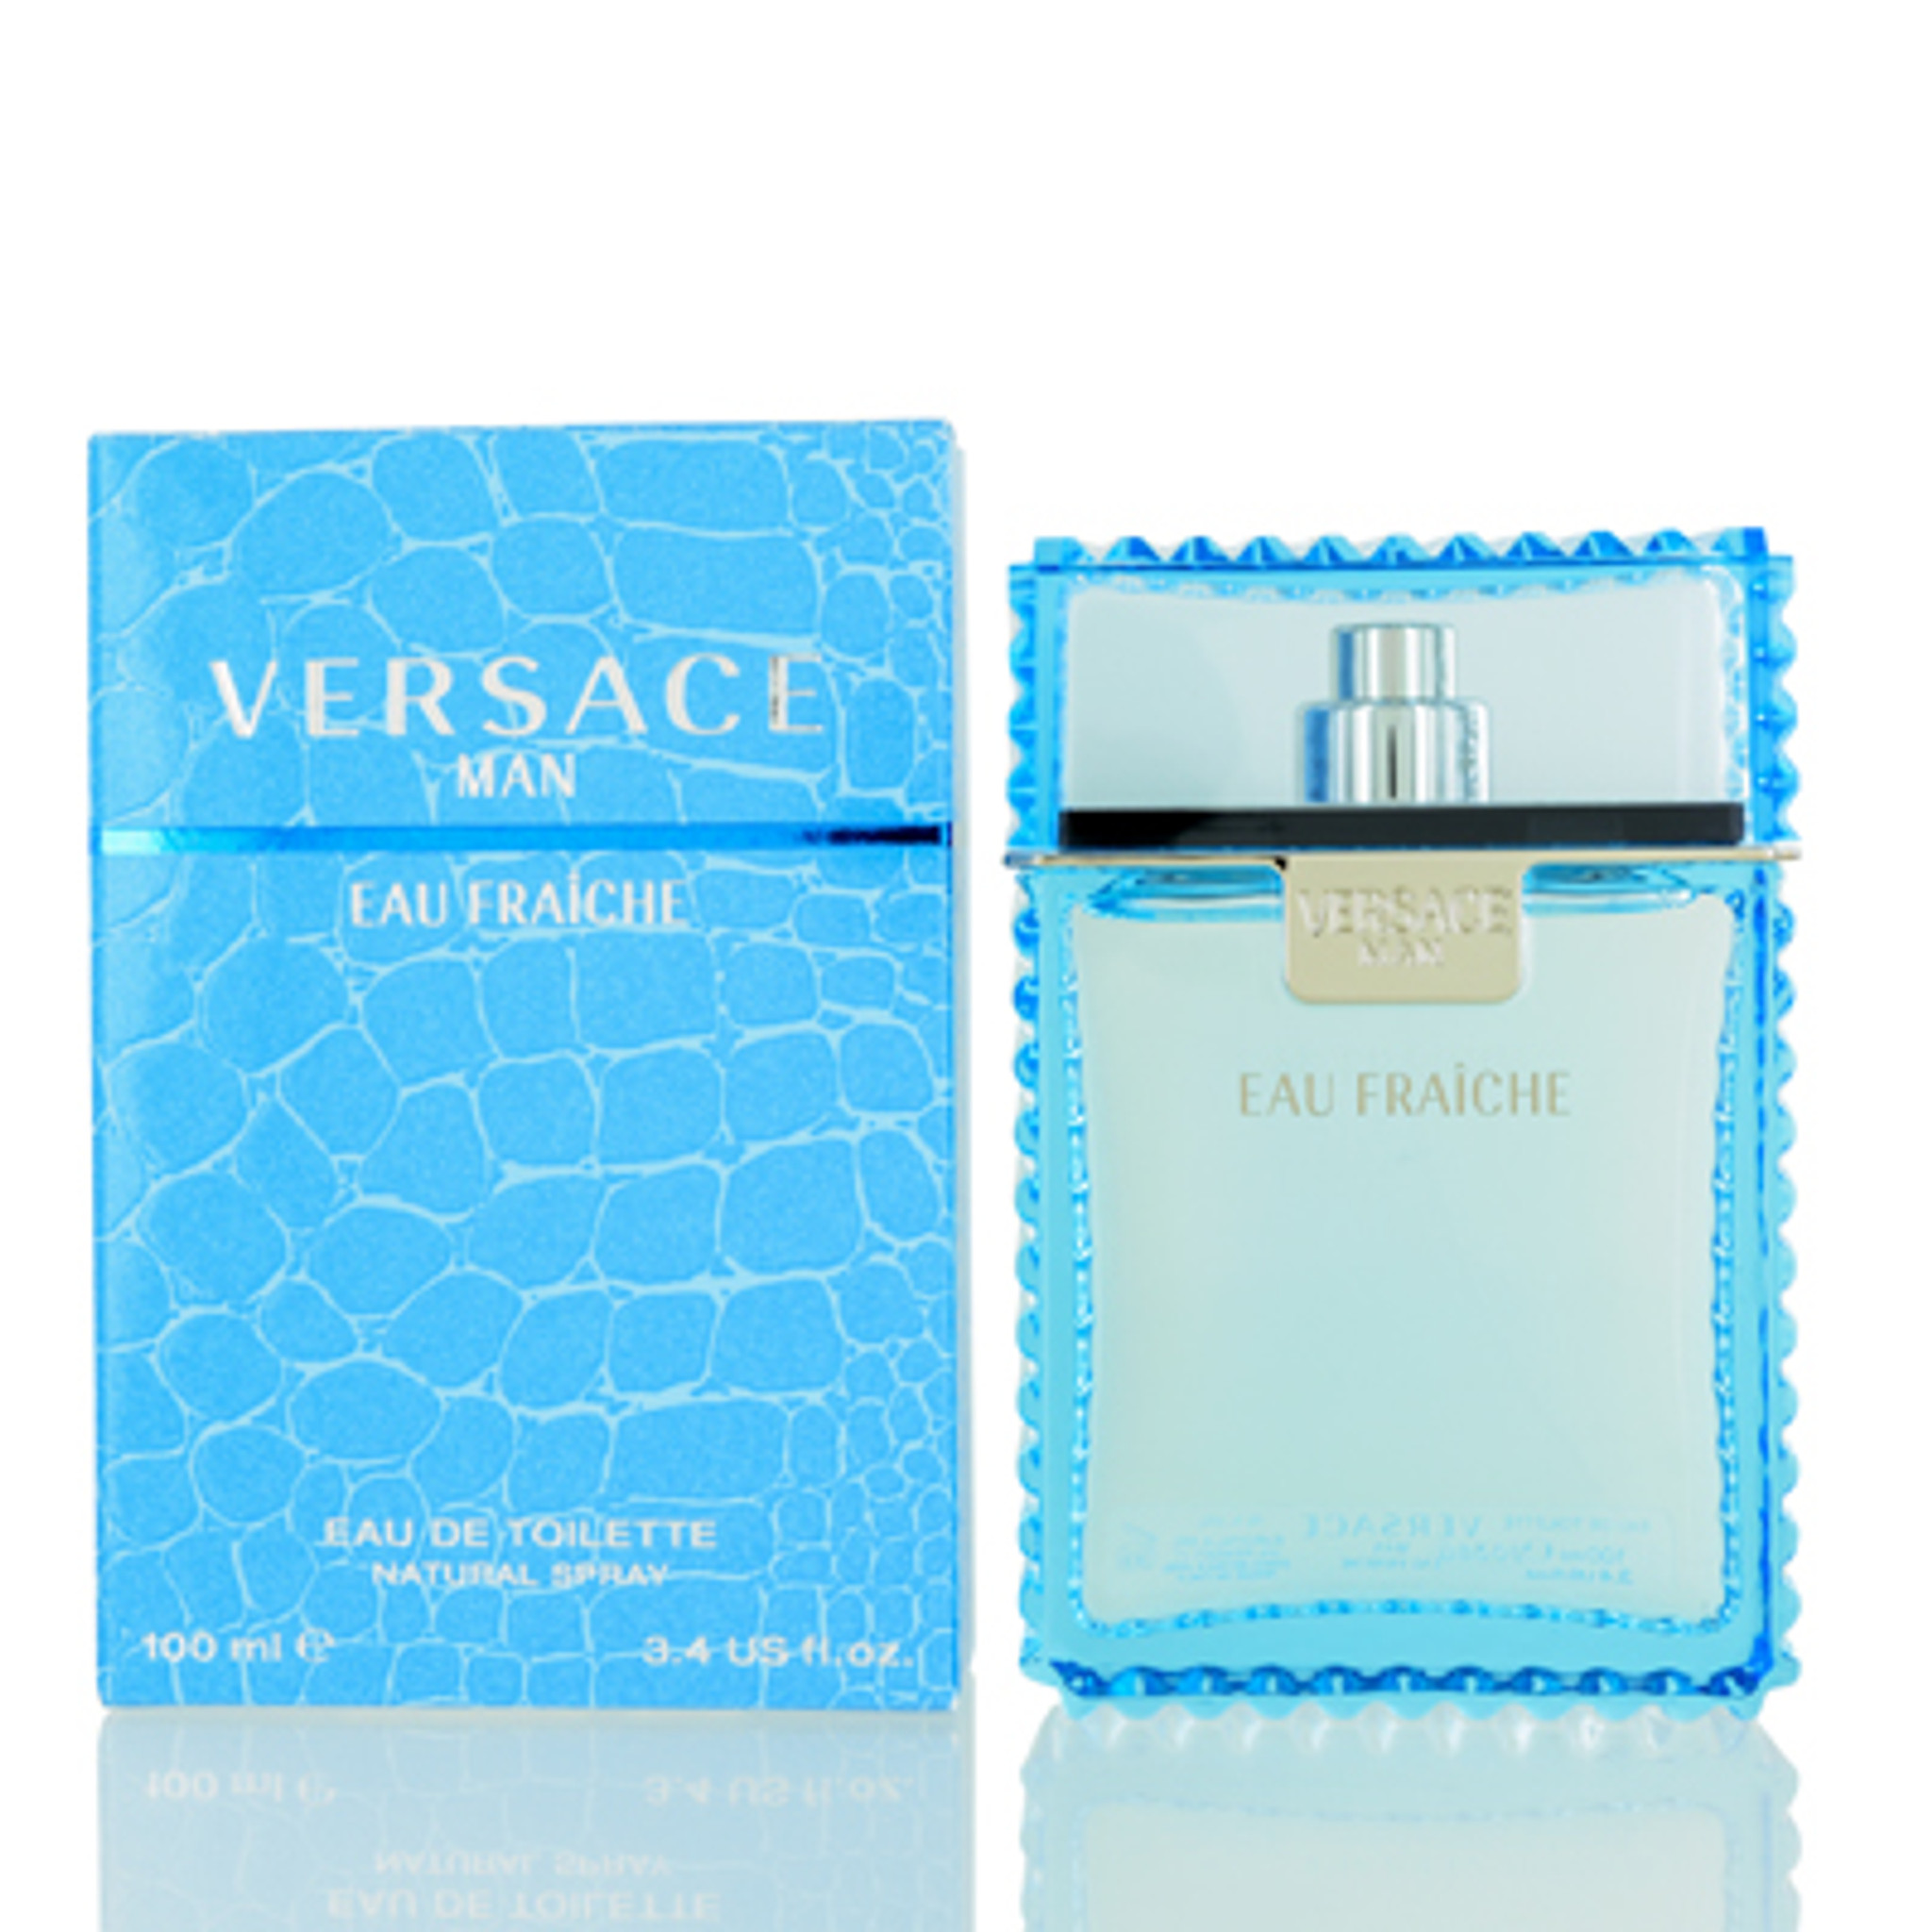 versace blue bottle perfume